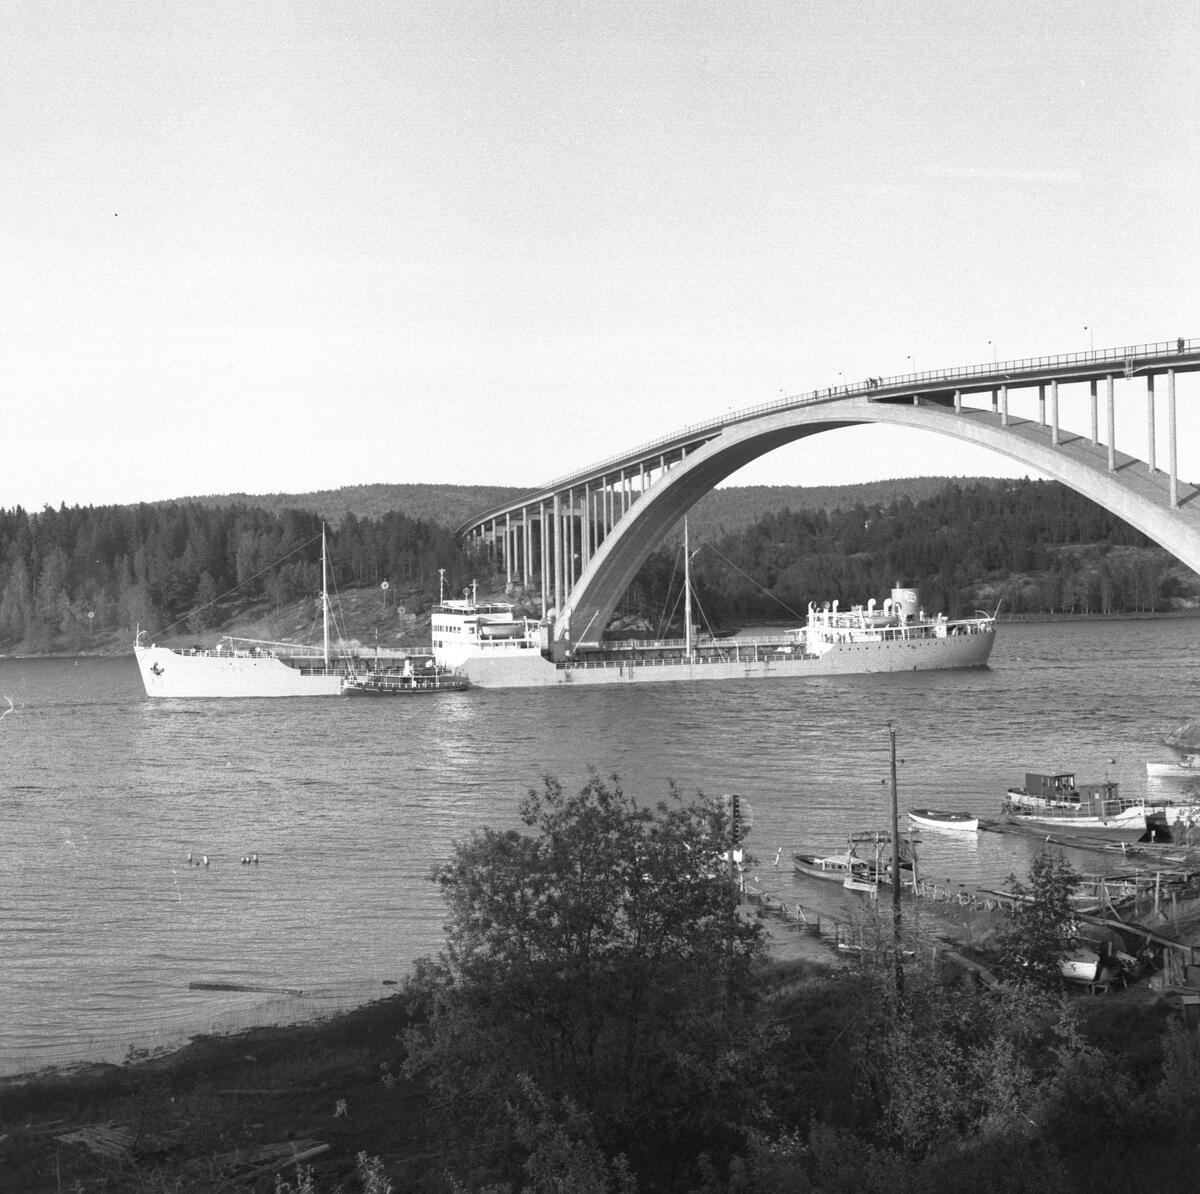 Fartyget Sira vid Sandöbron

